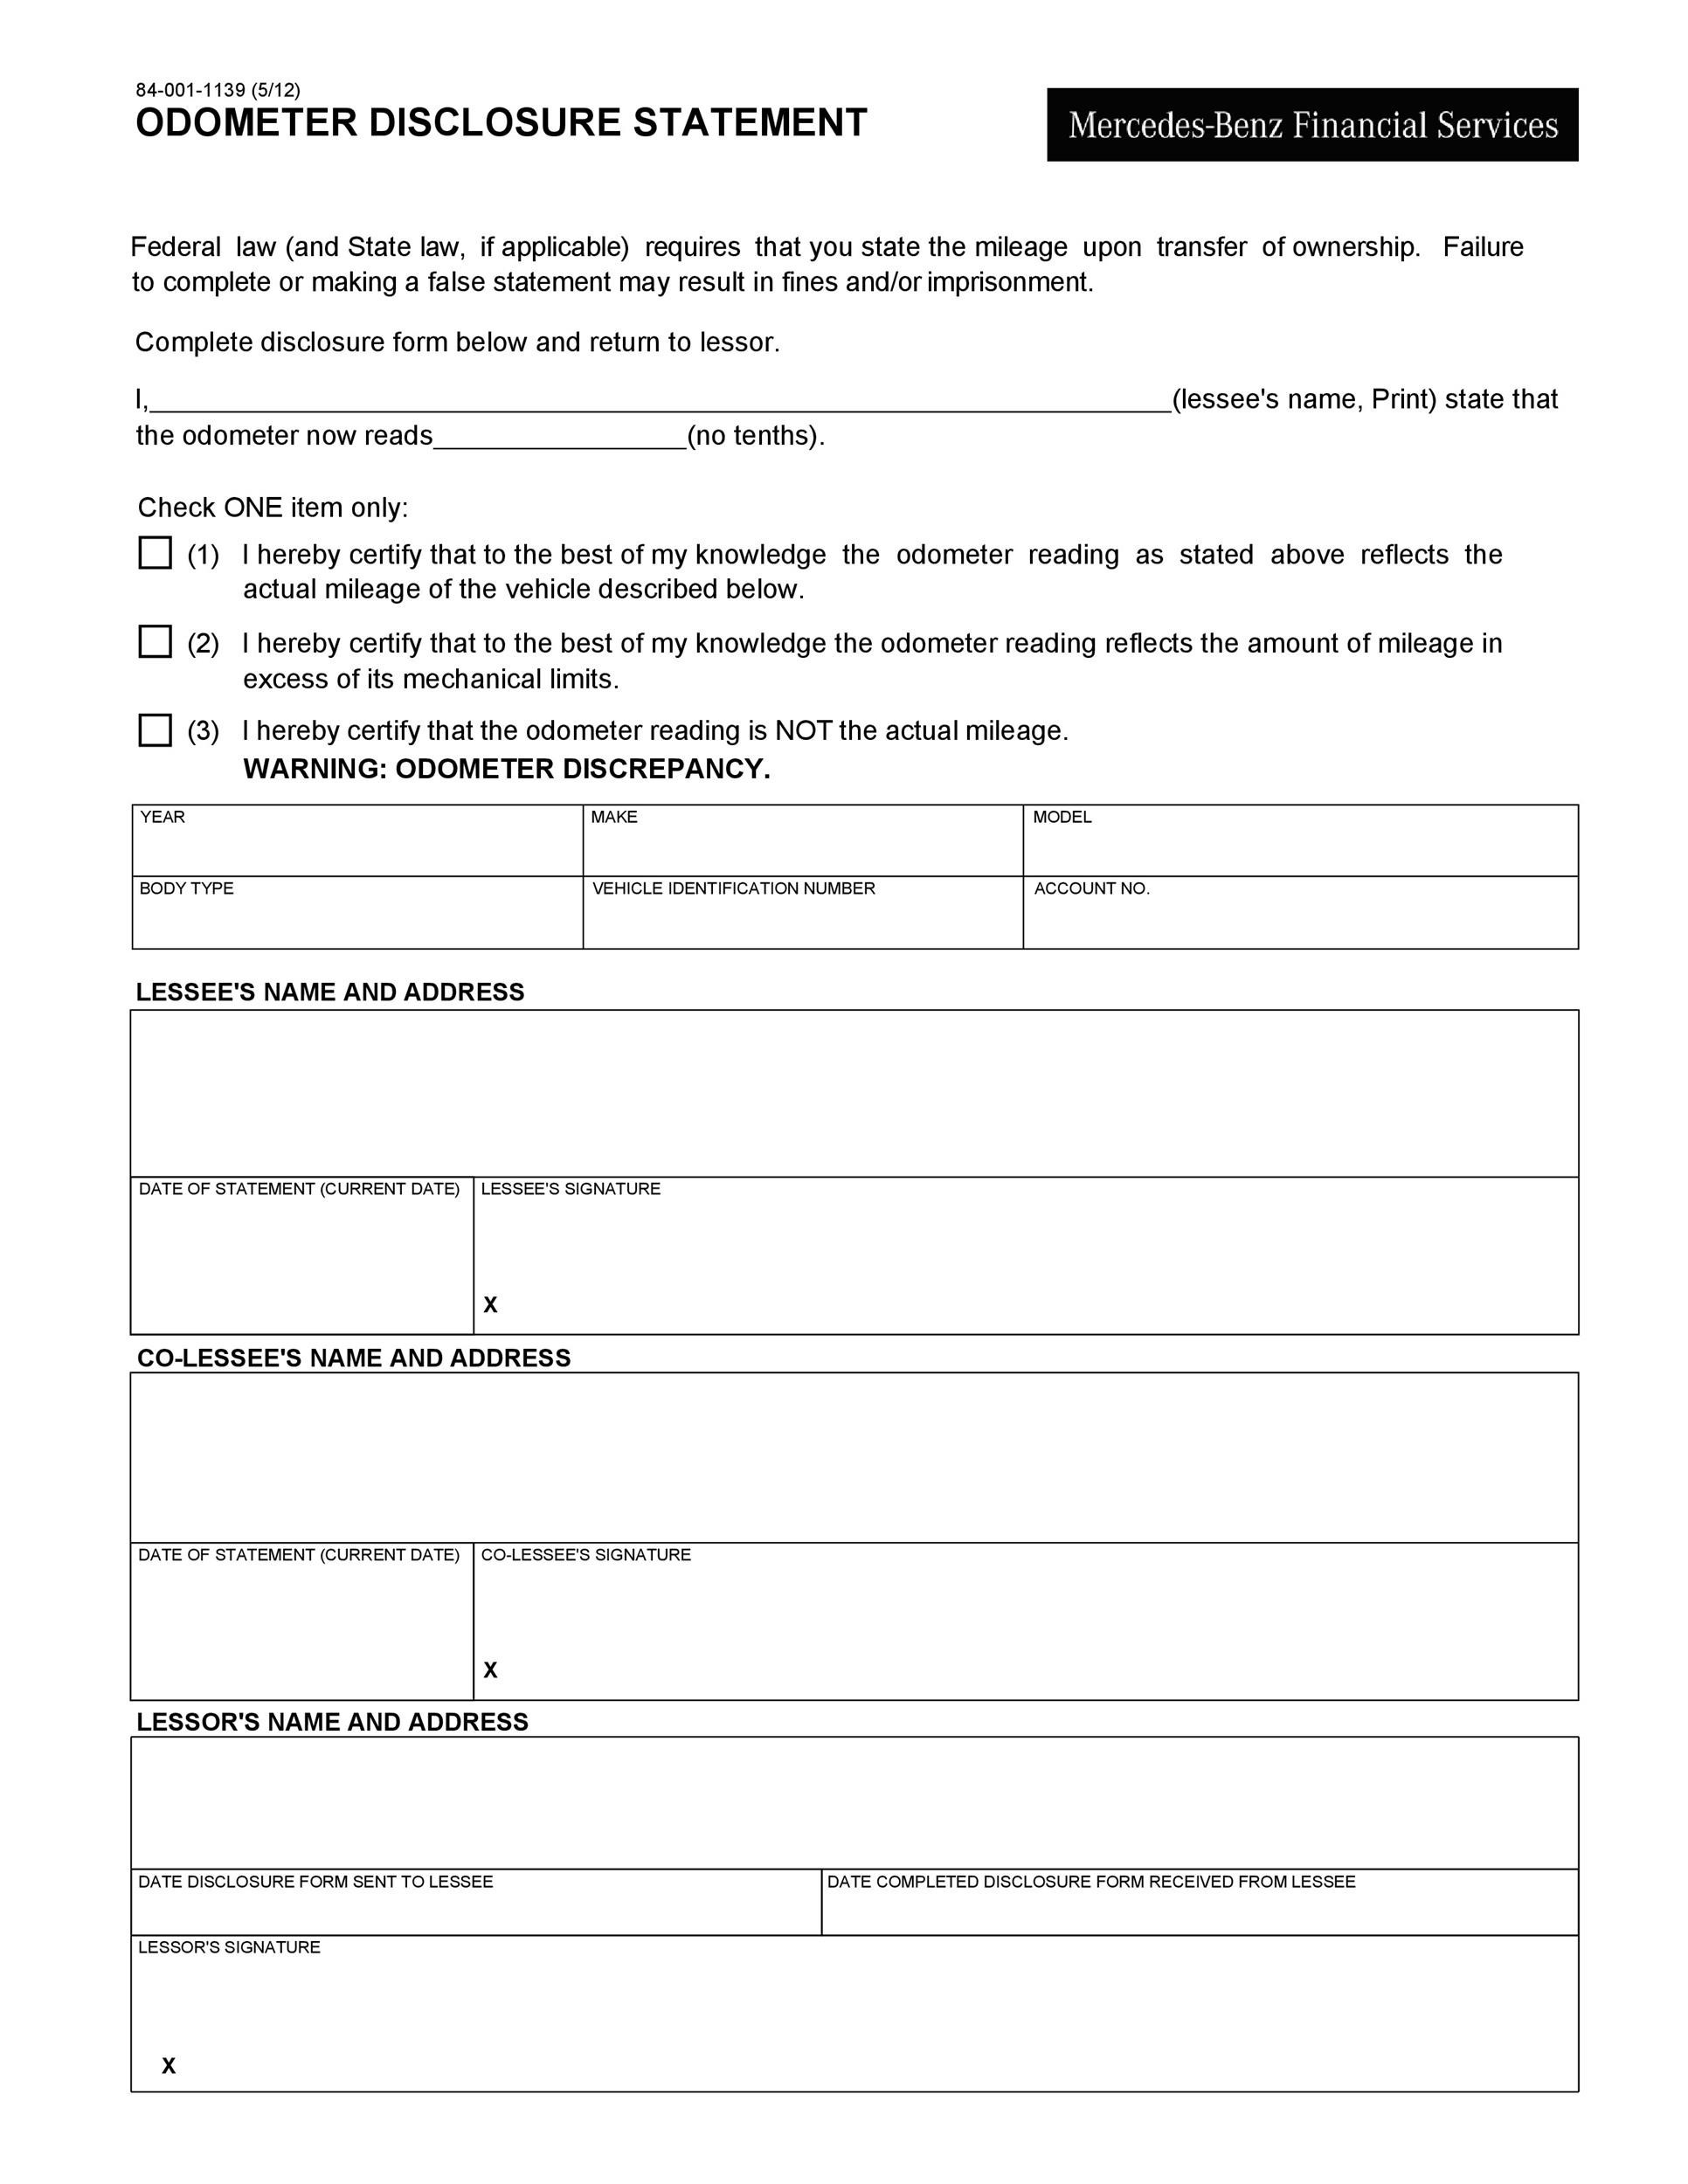 dmv odometer disclosure statement form